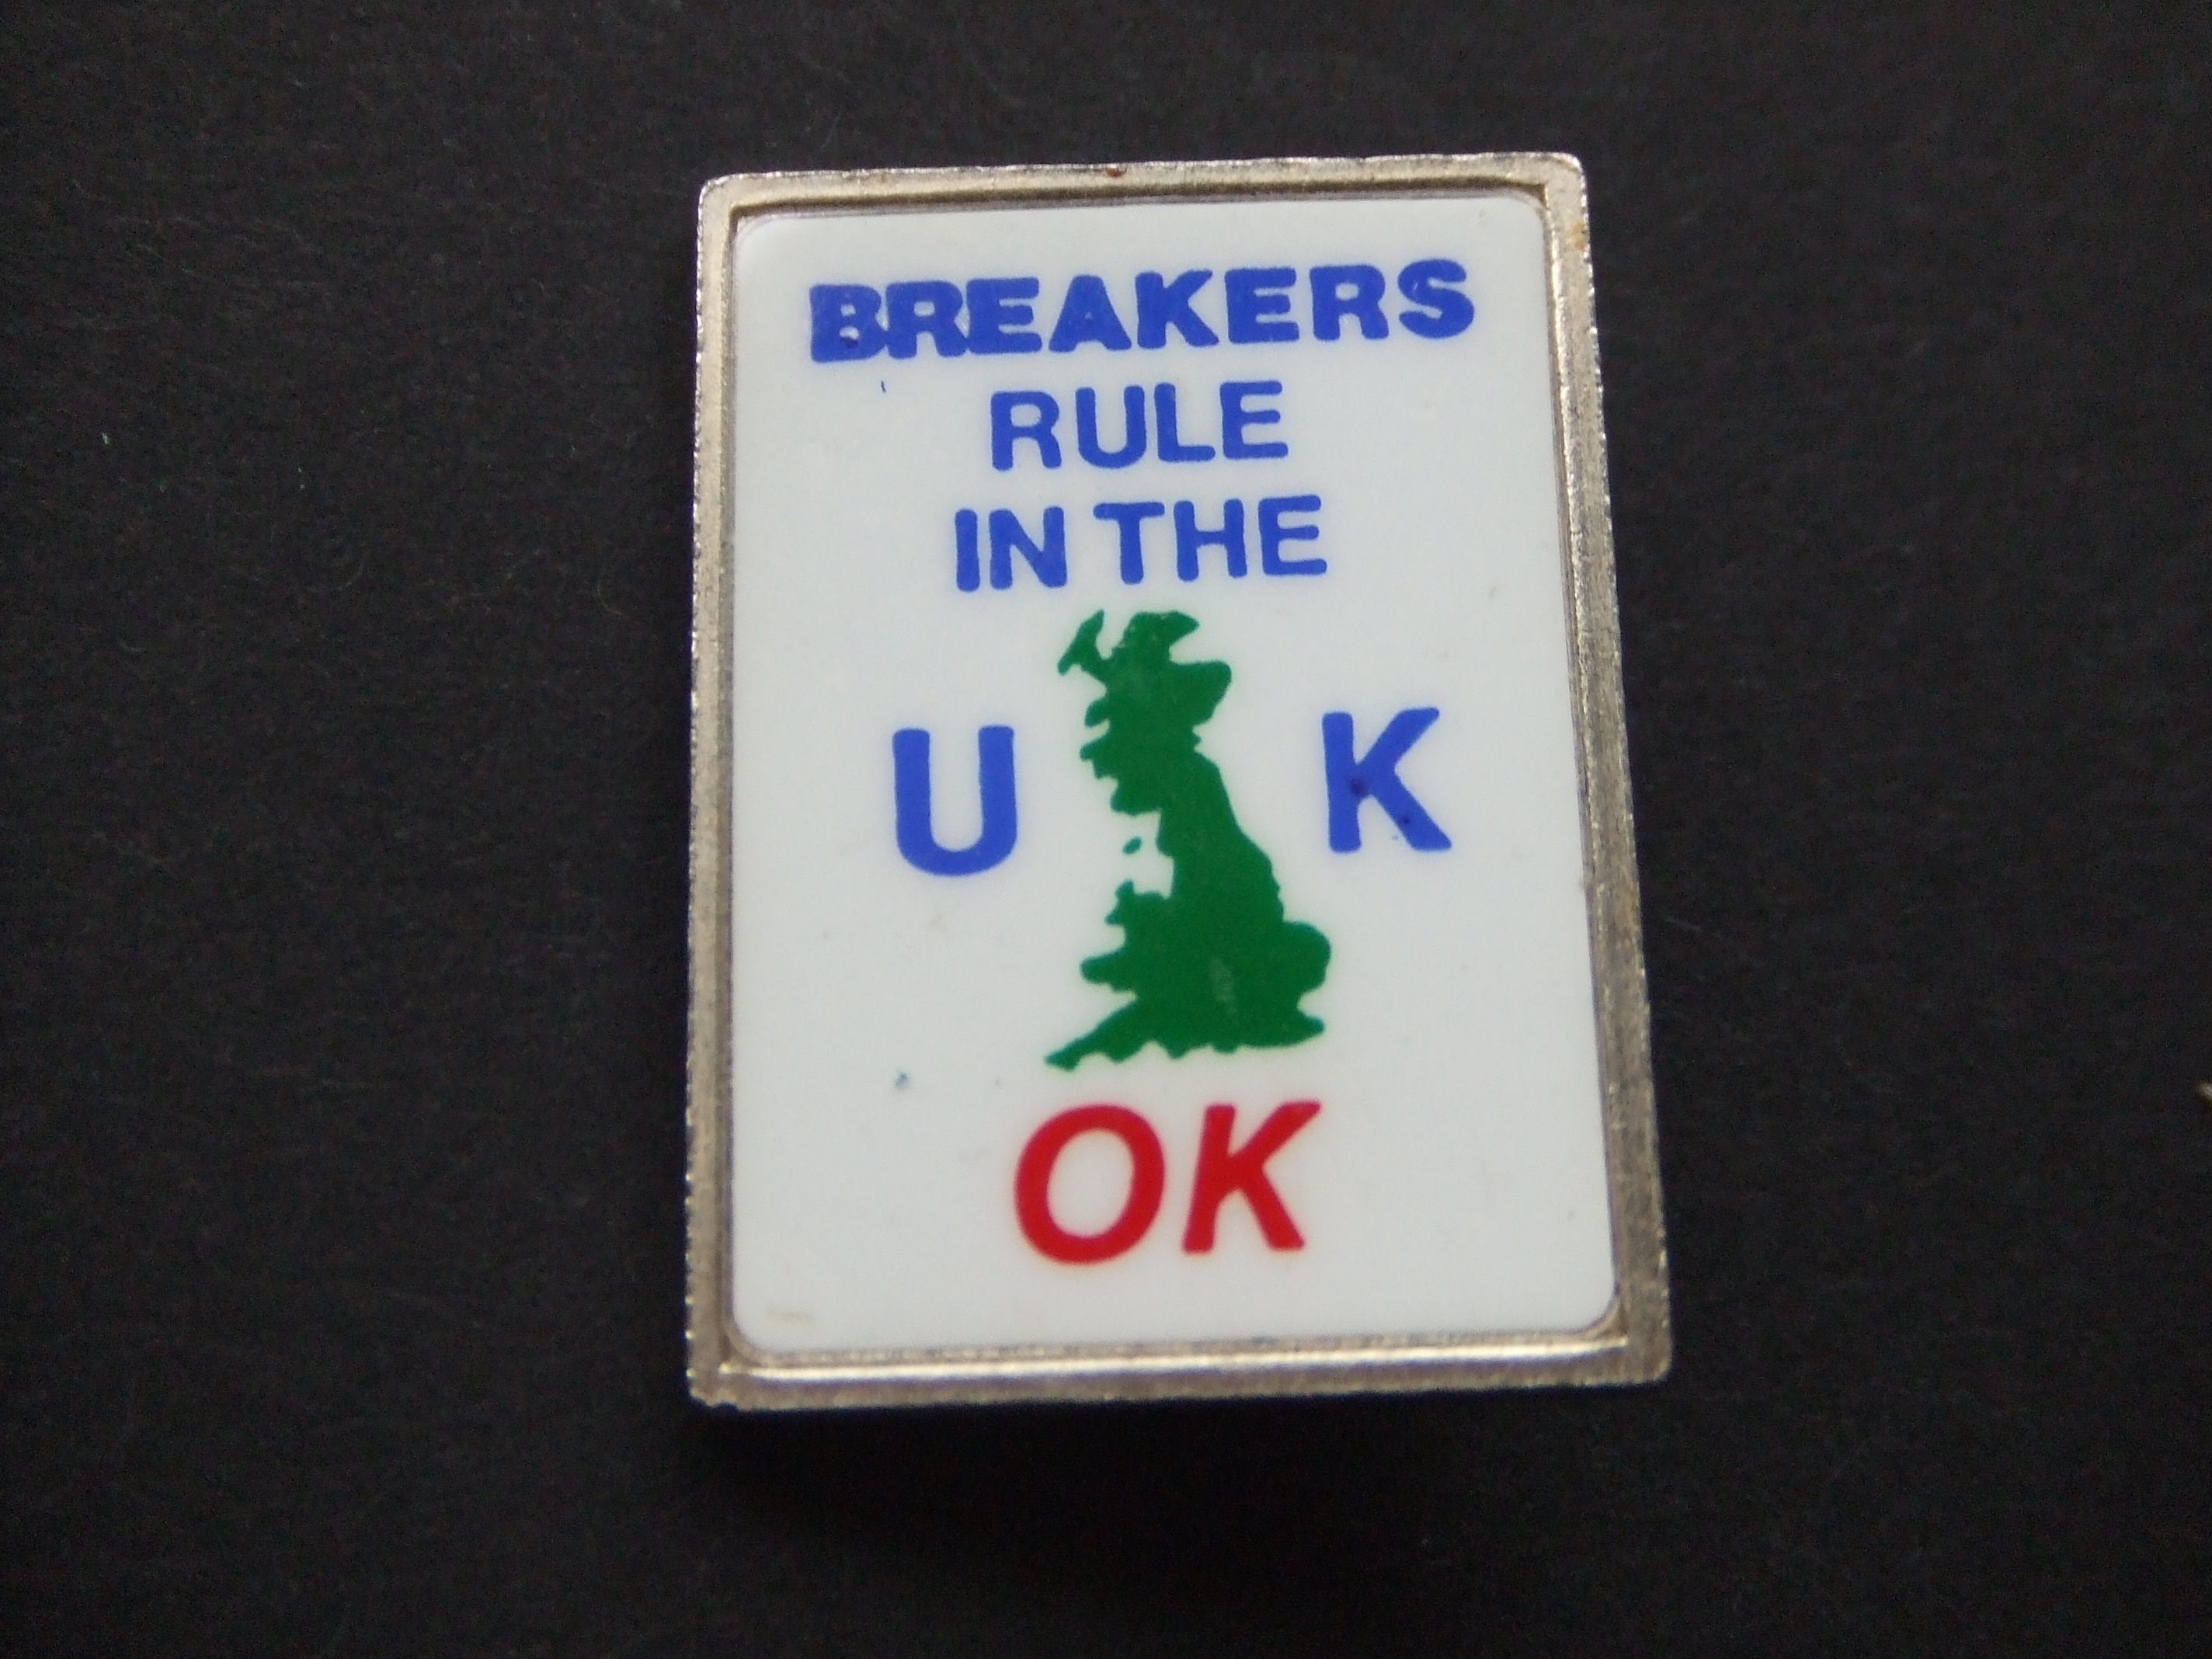 Breakers rule in the UK